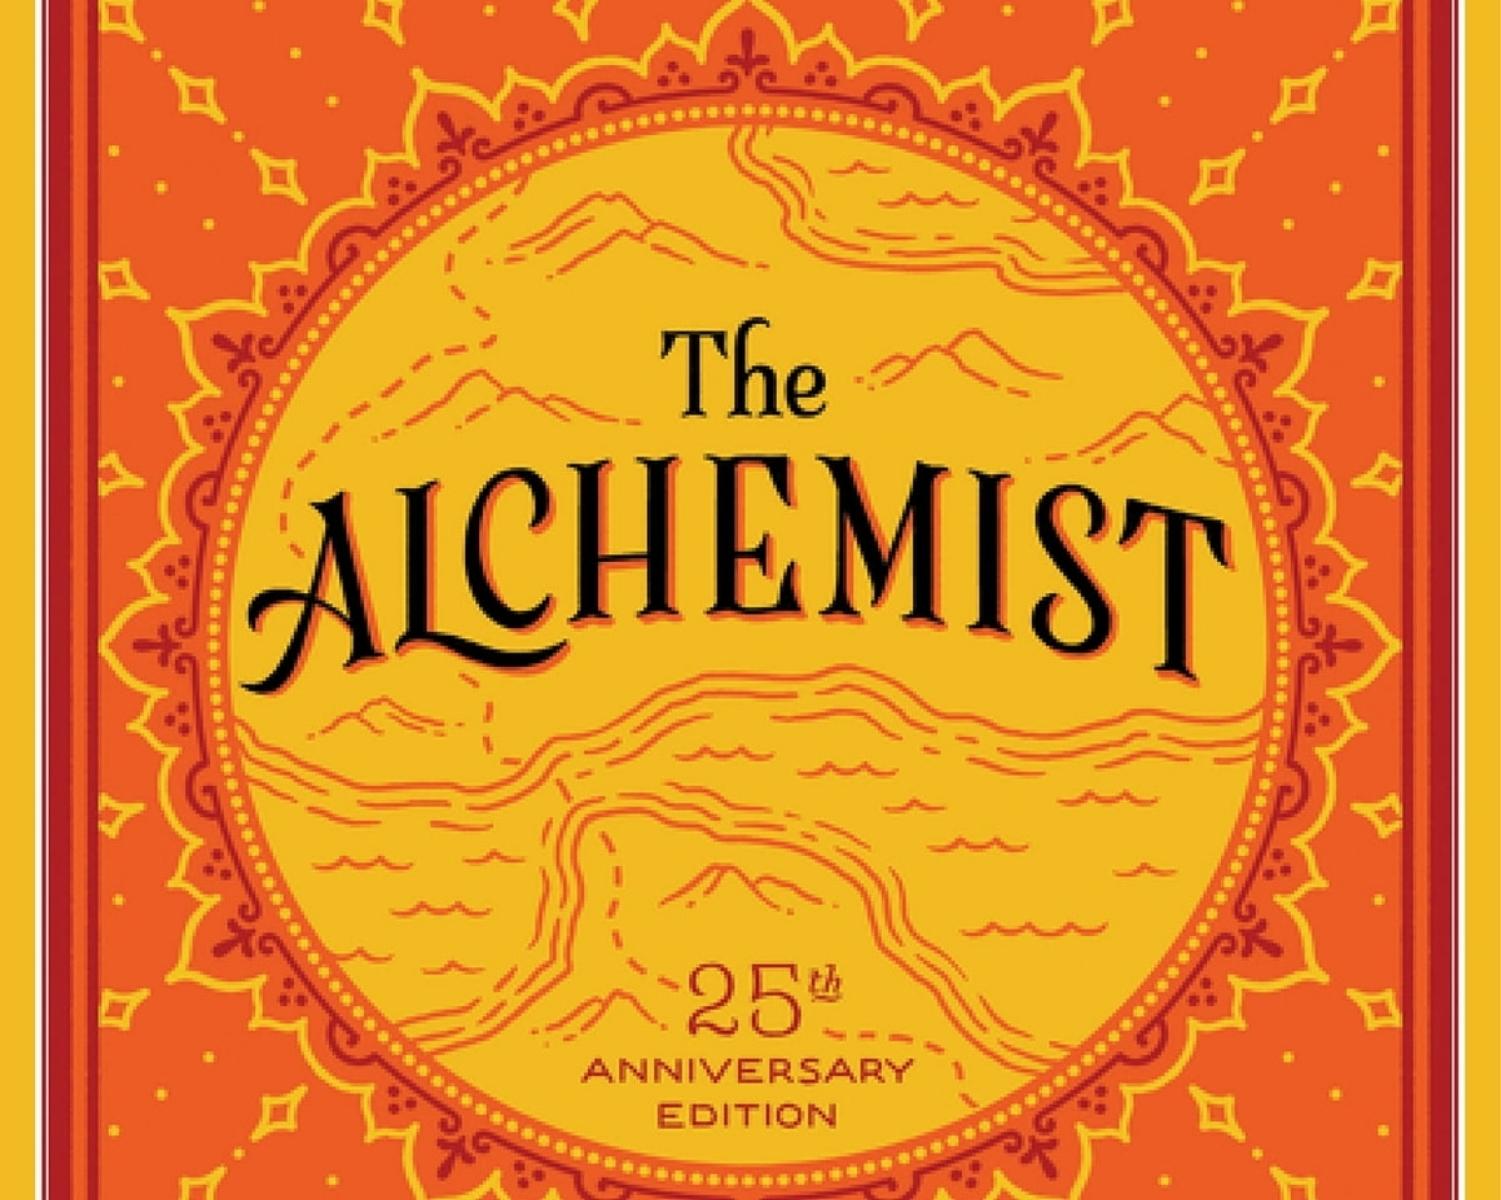 "The Alchemist" by Paulo Coelho